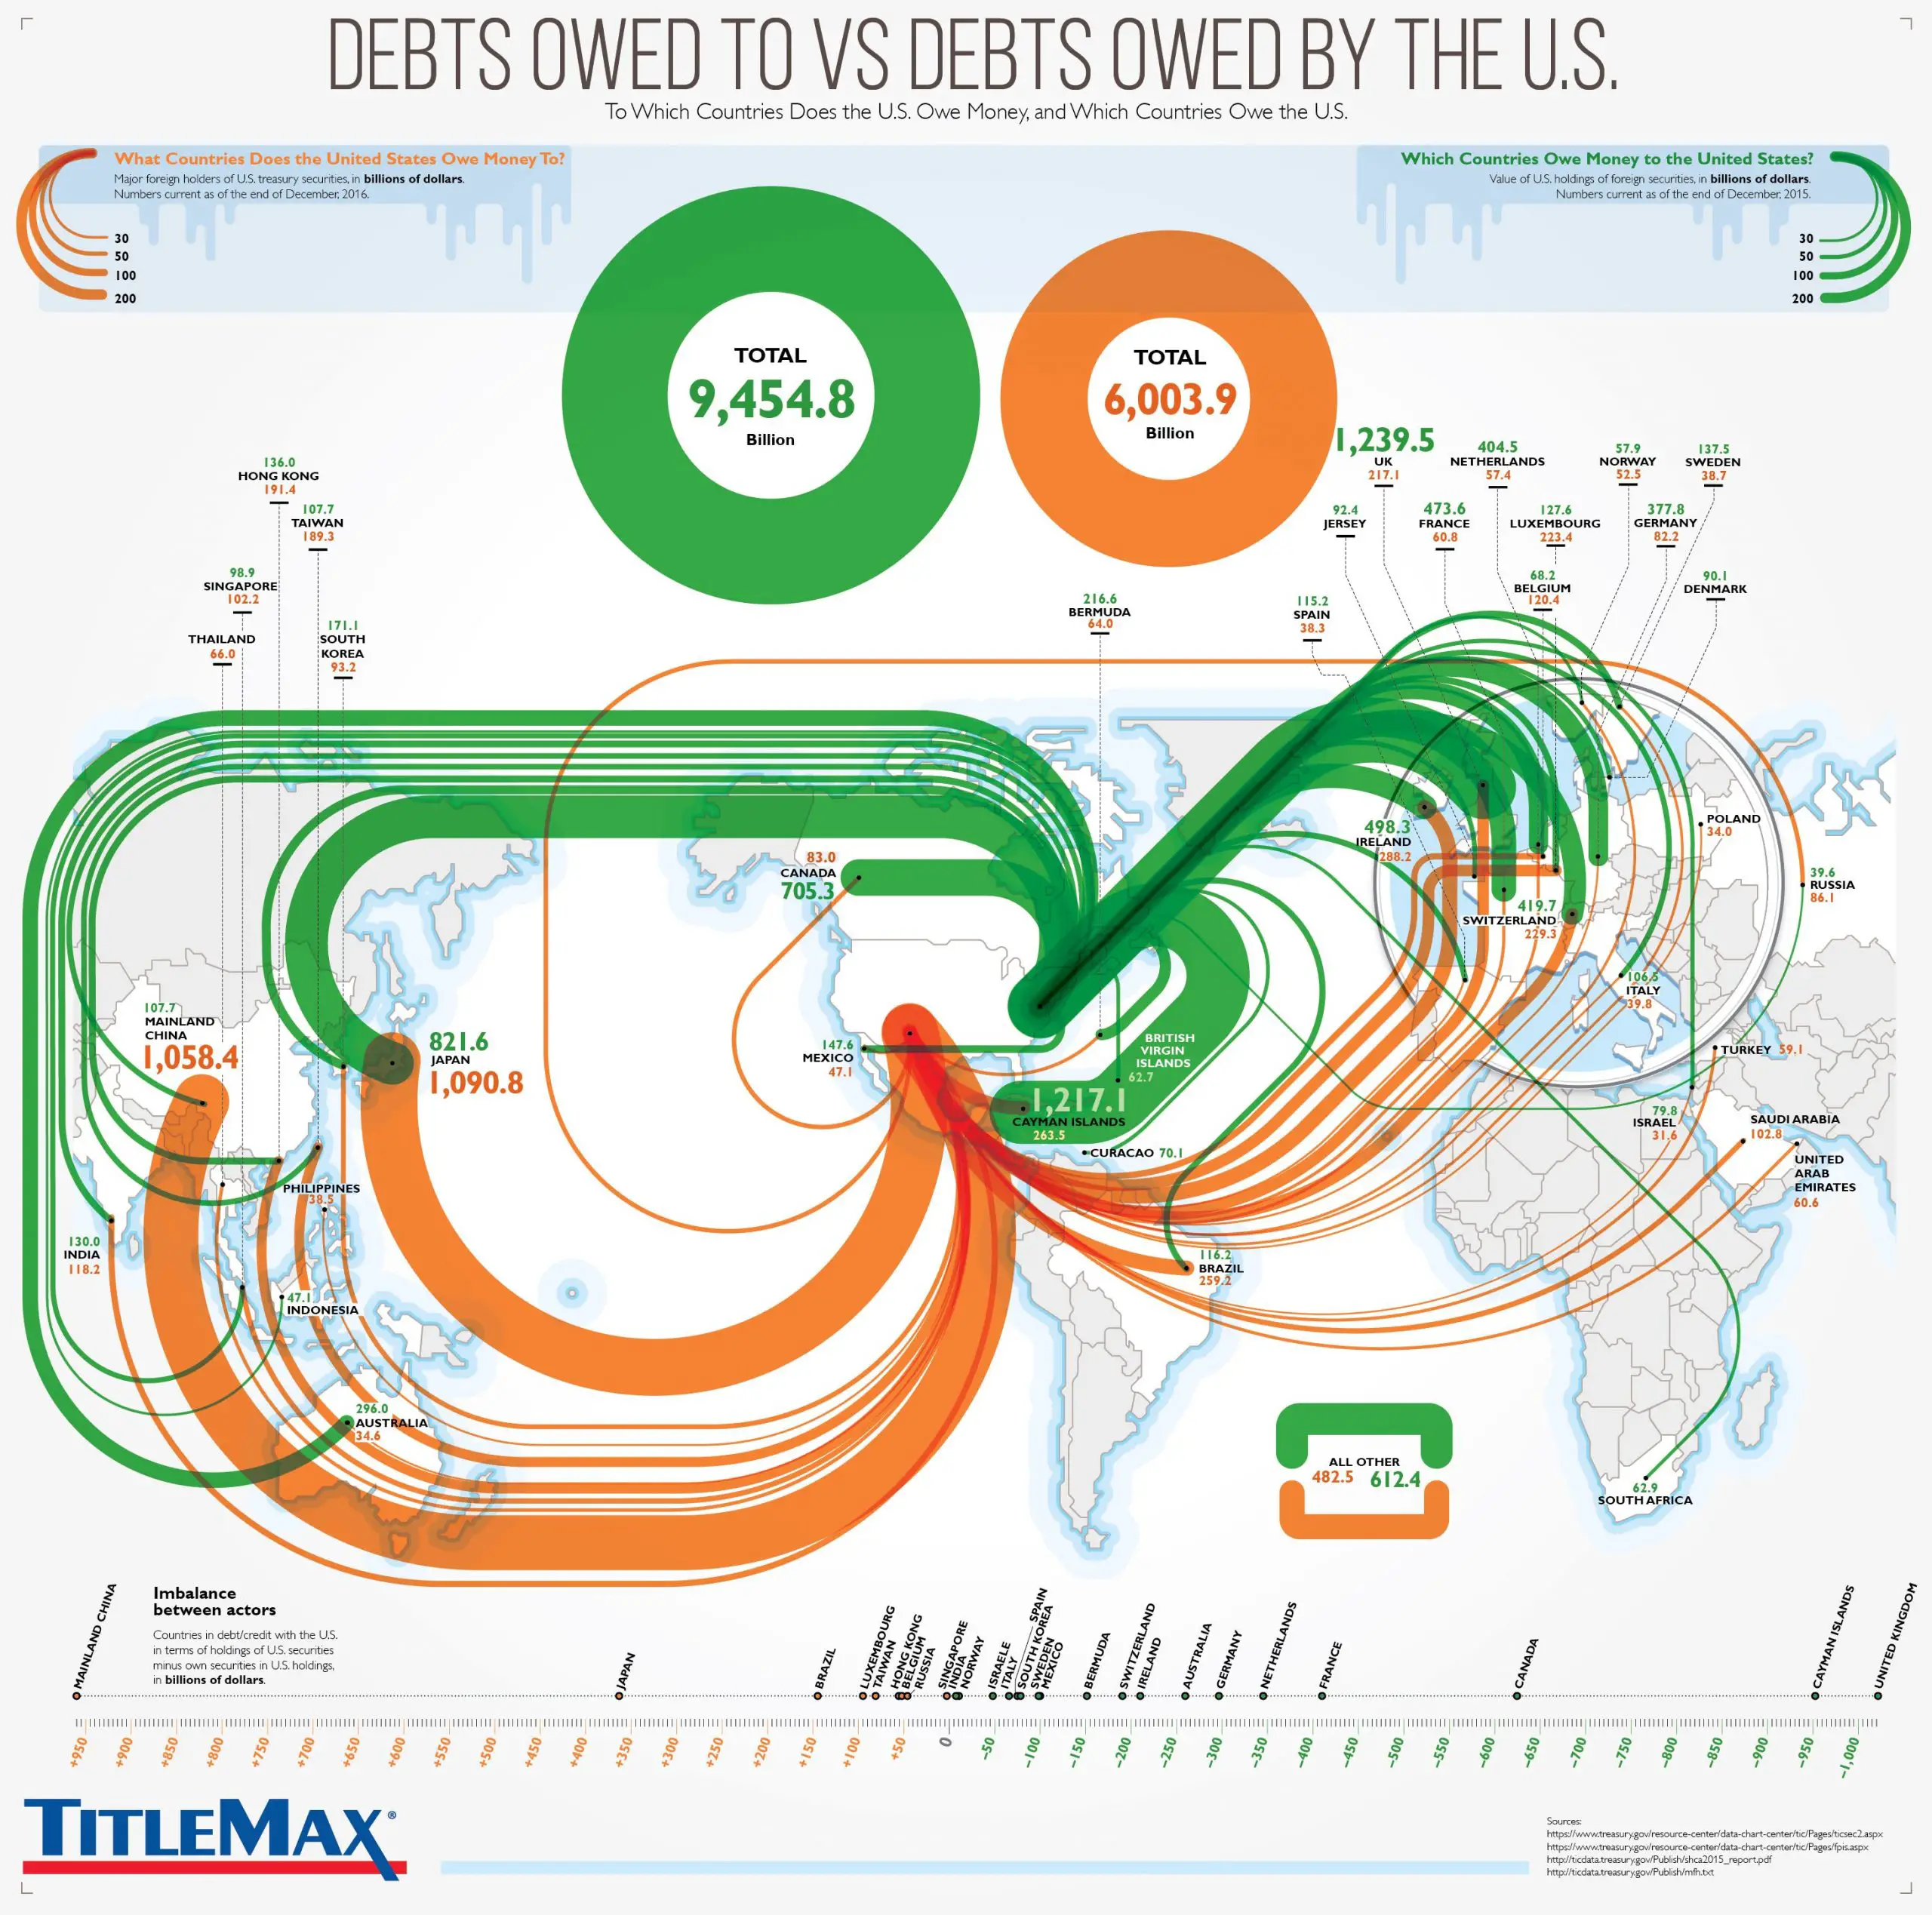 Debts Owed to vs. Debts Owed by the U.S.